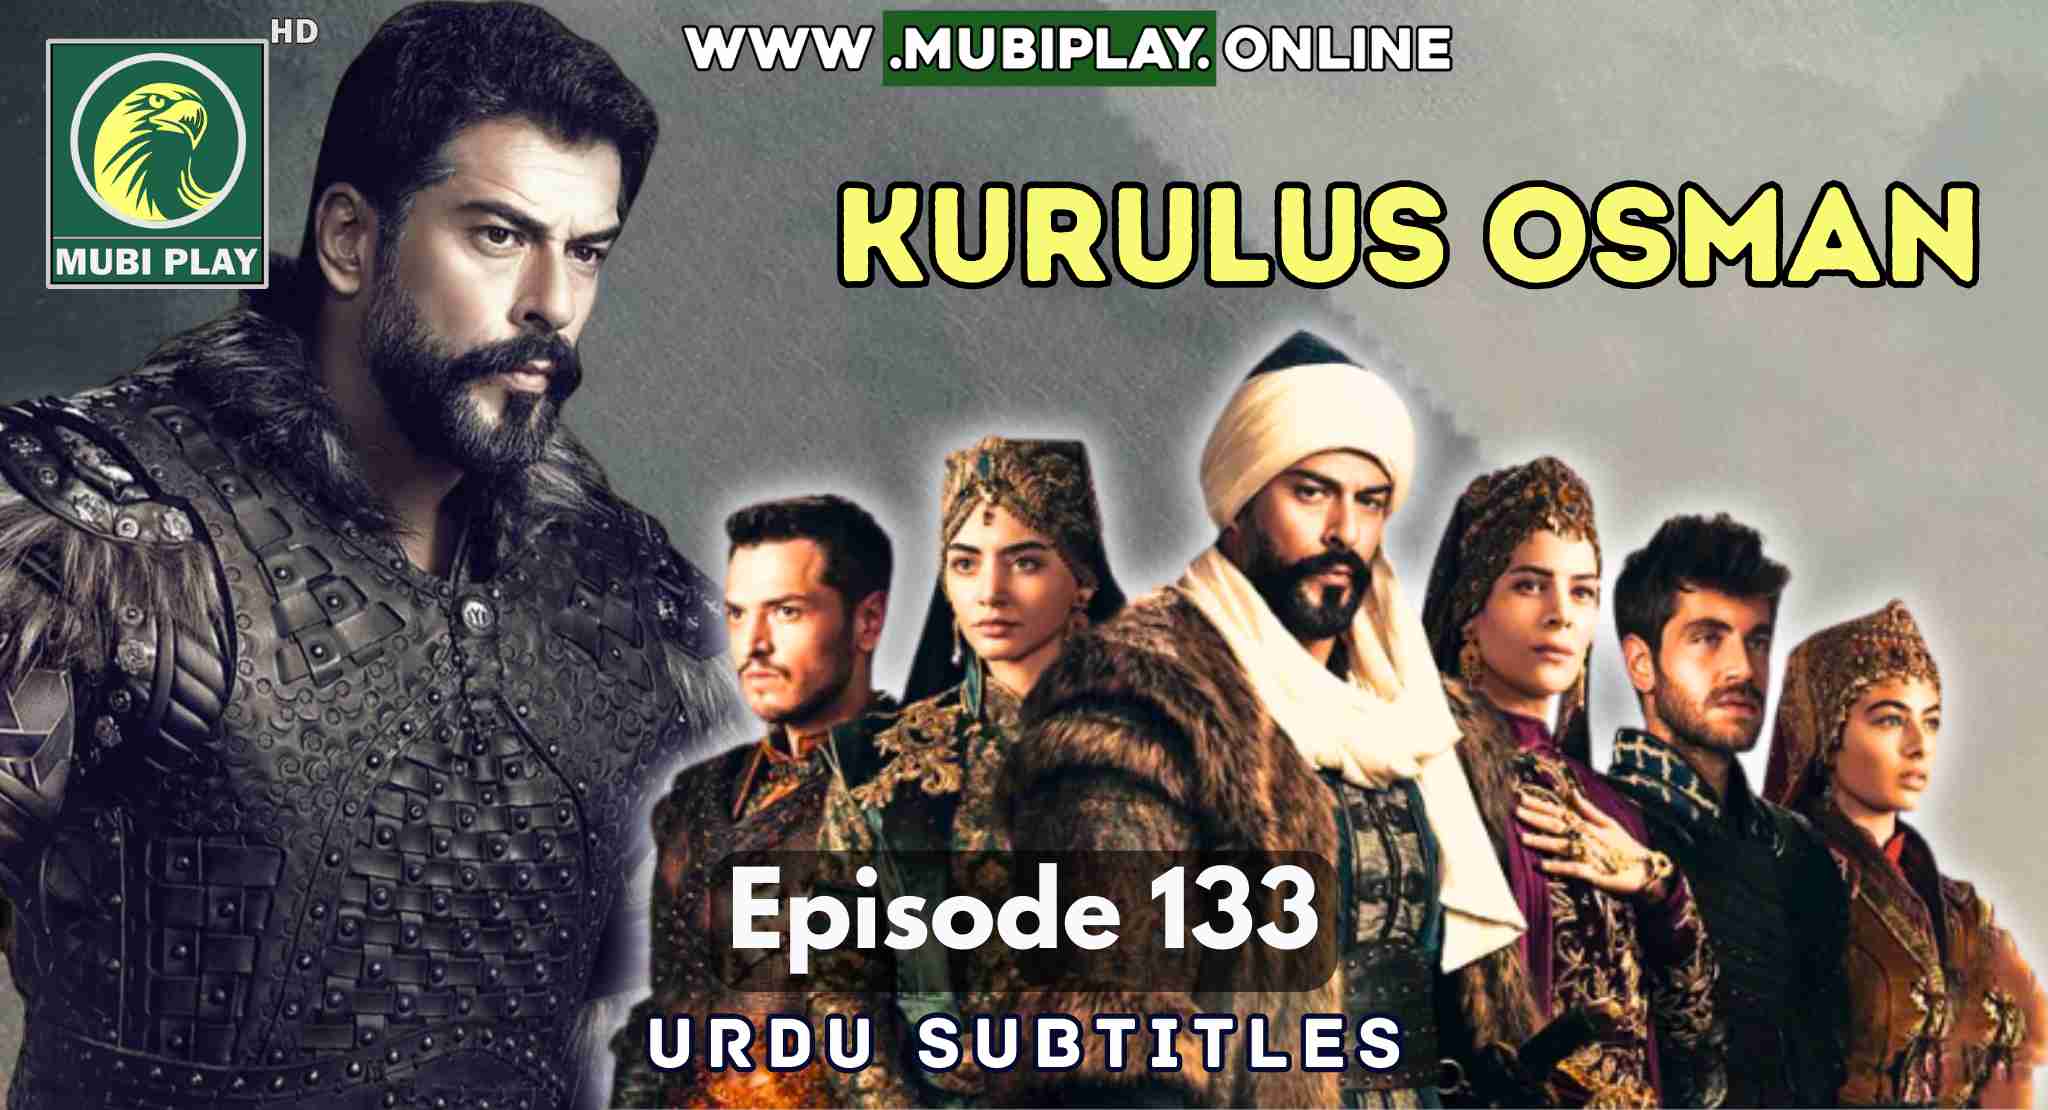 Kurulus Osman Episode 133 with Urdu Subtitles by Mubi Play